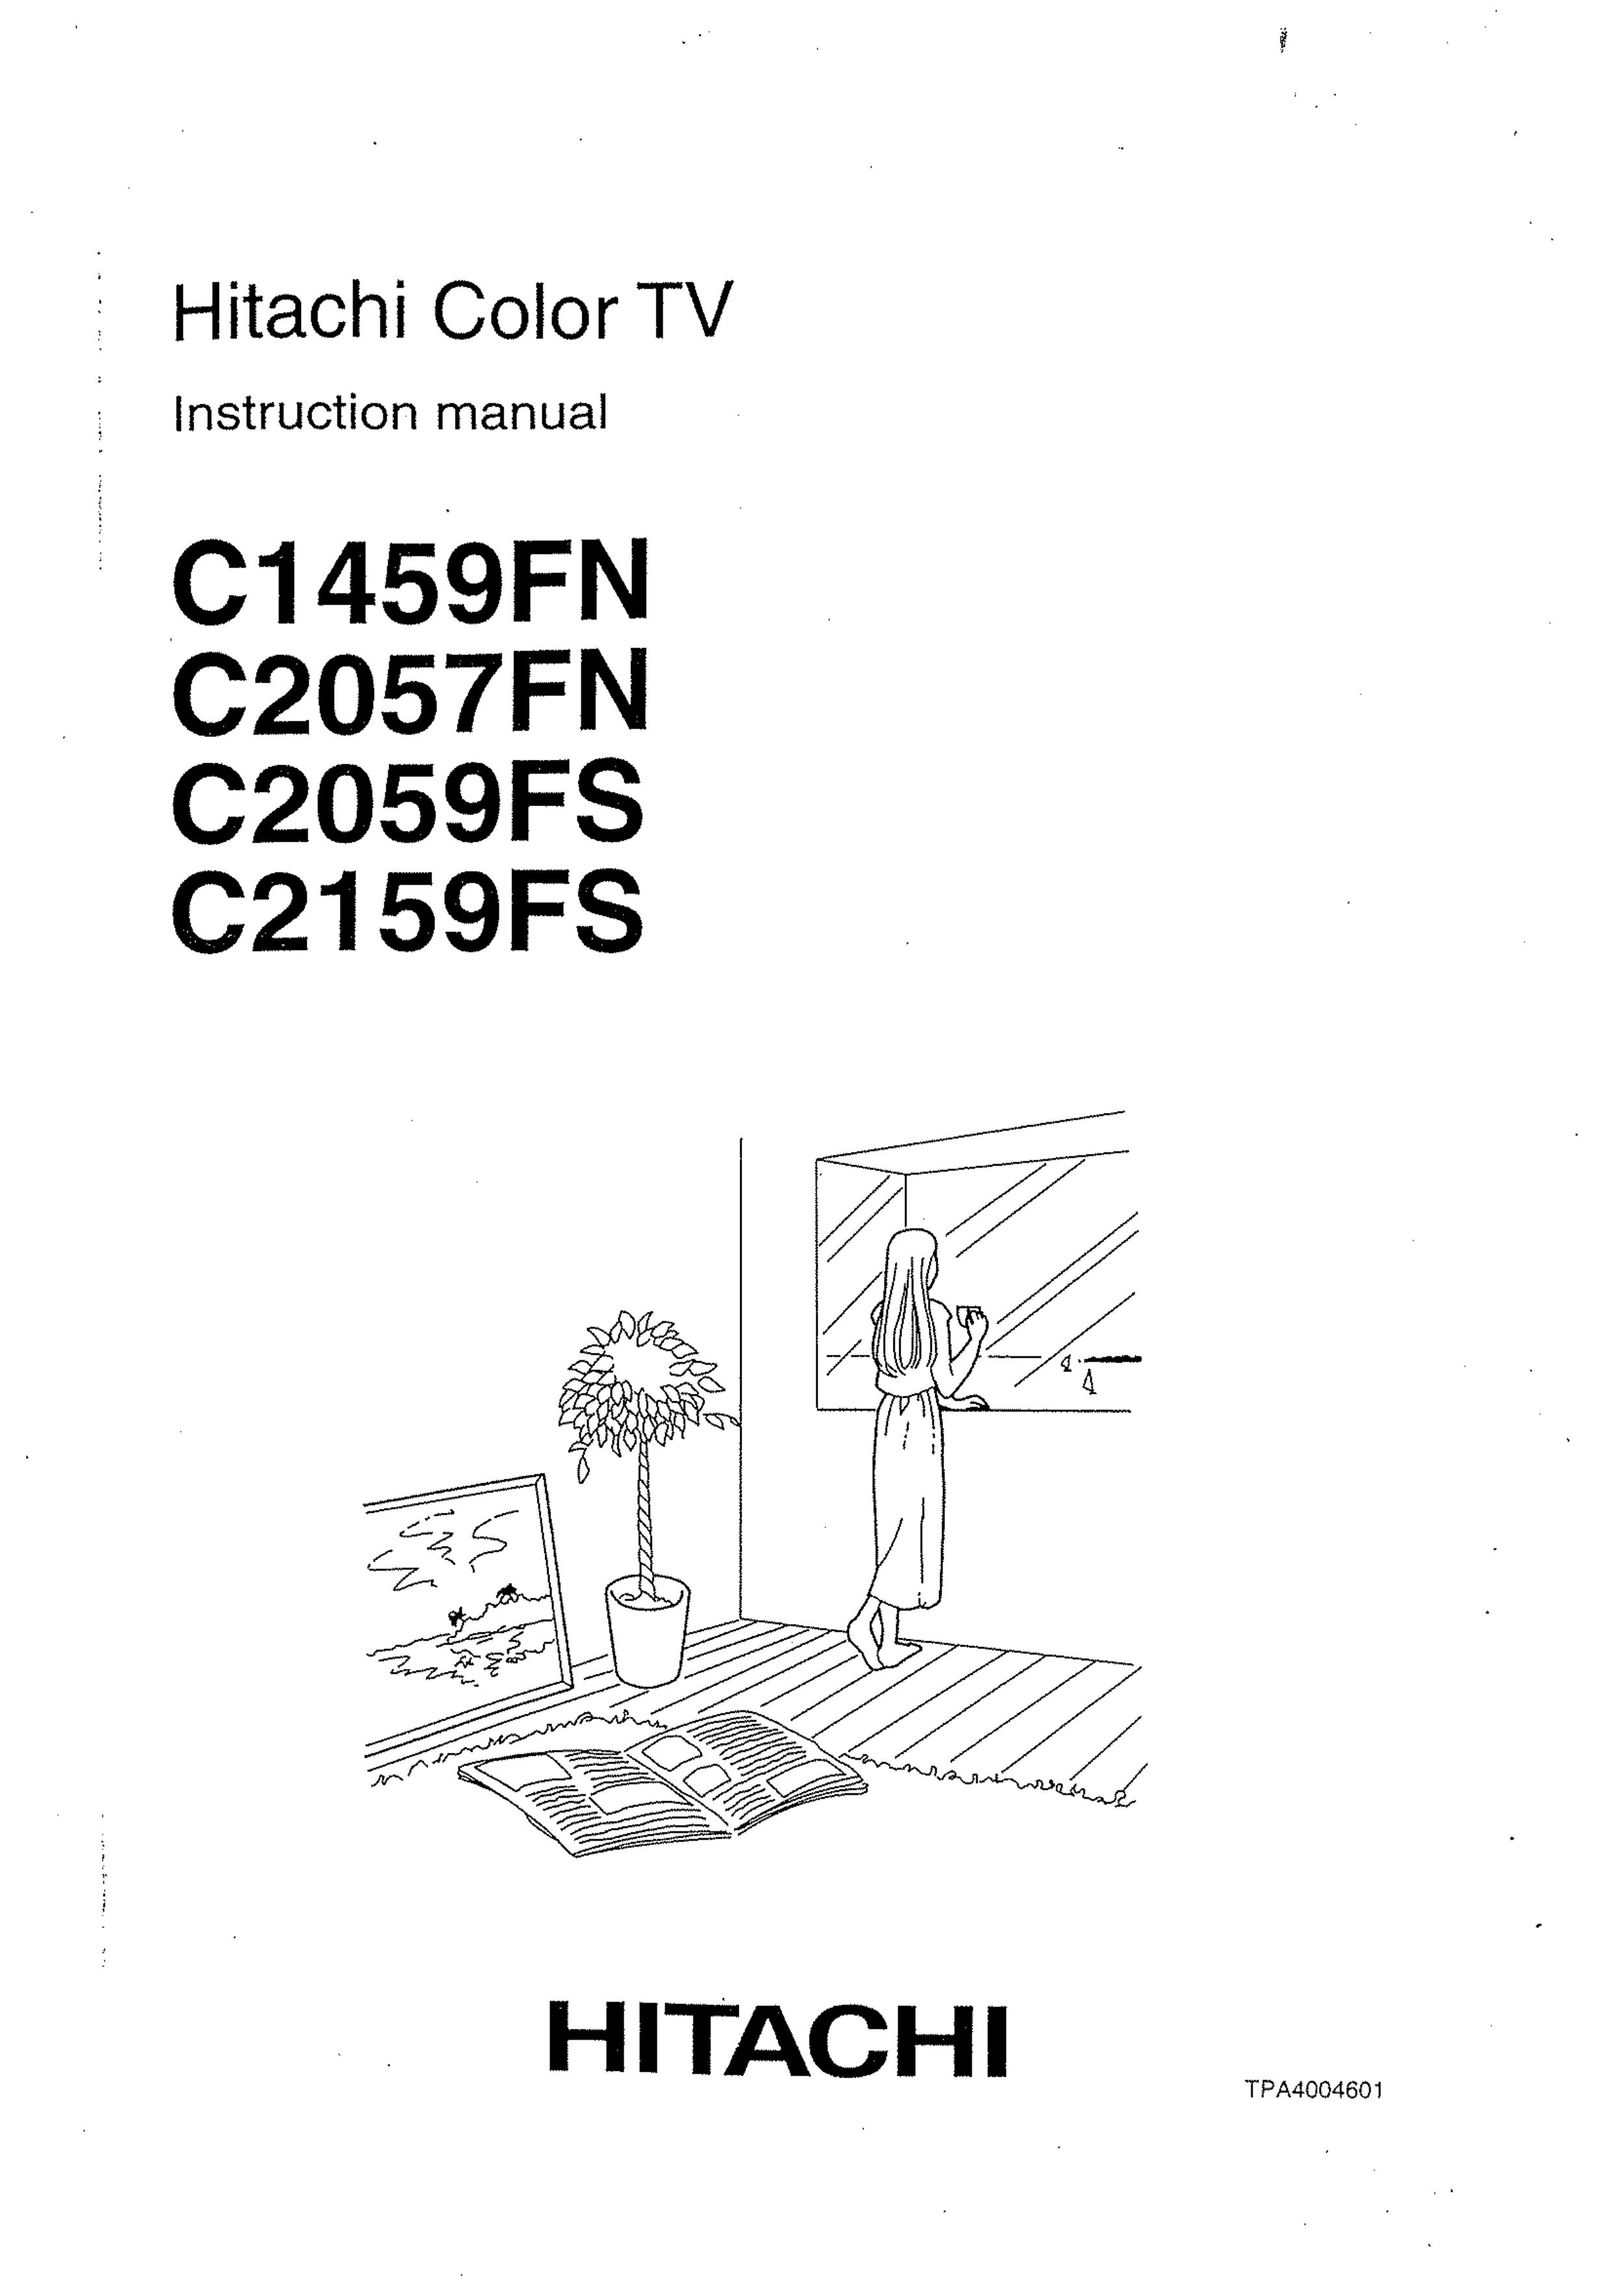 Hitachi C2057FN CRT Television User Manual